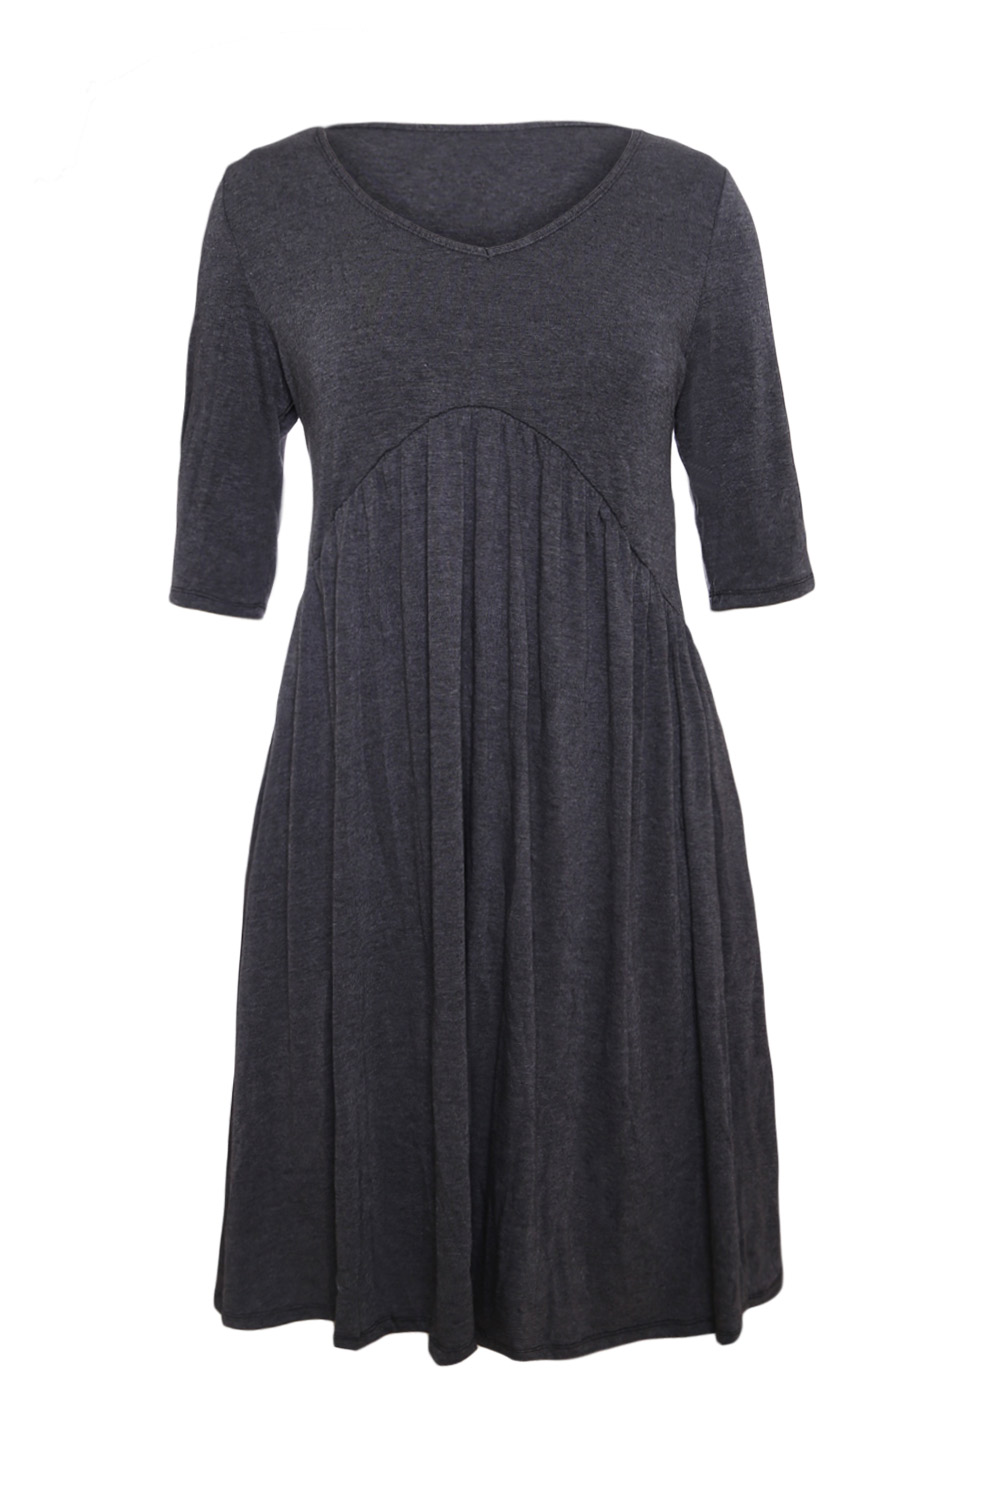 BY61653-11 Gray  Sleeve Draped Swing Dress